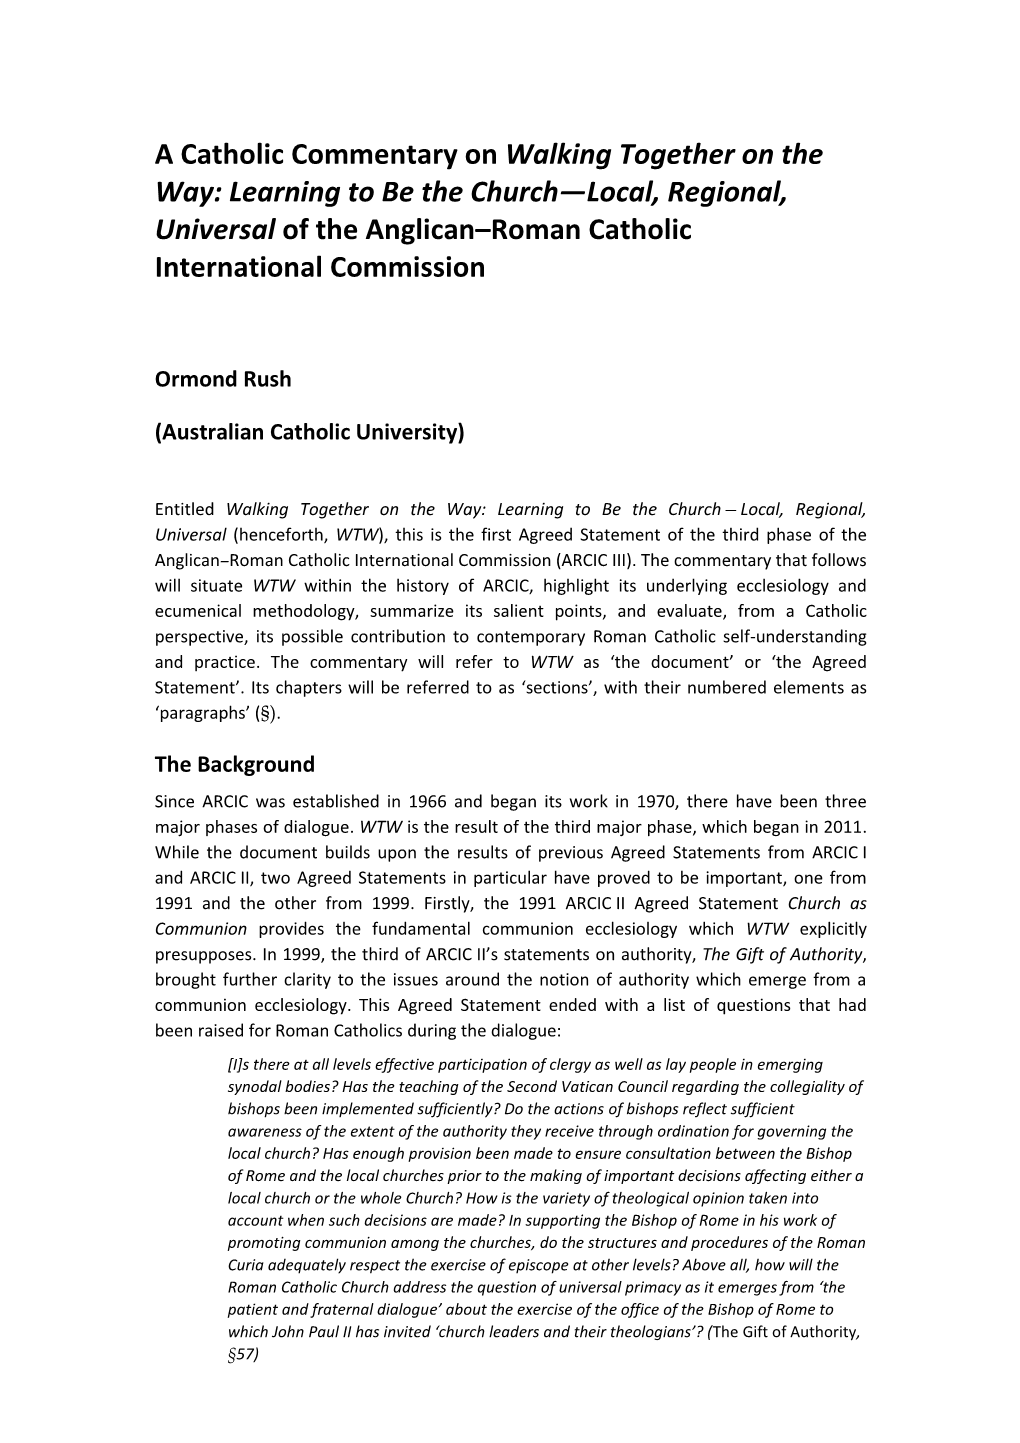 Roman Catholic Commentary on ARCIC III